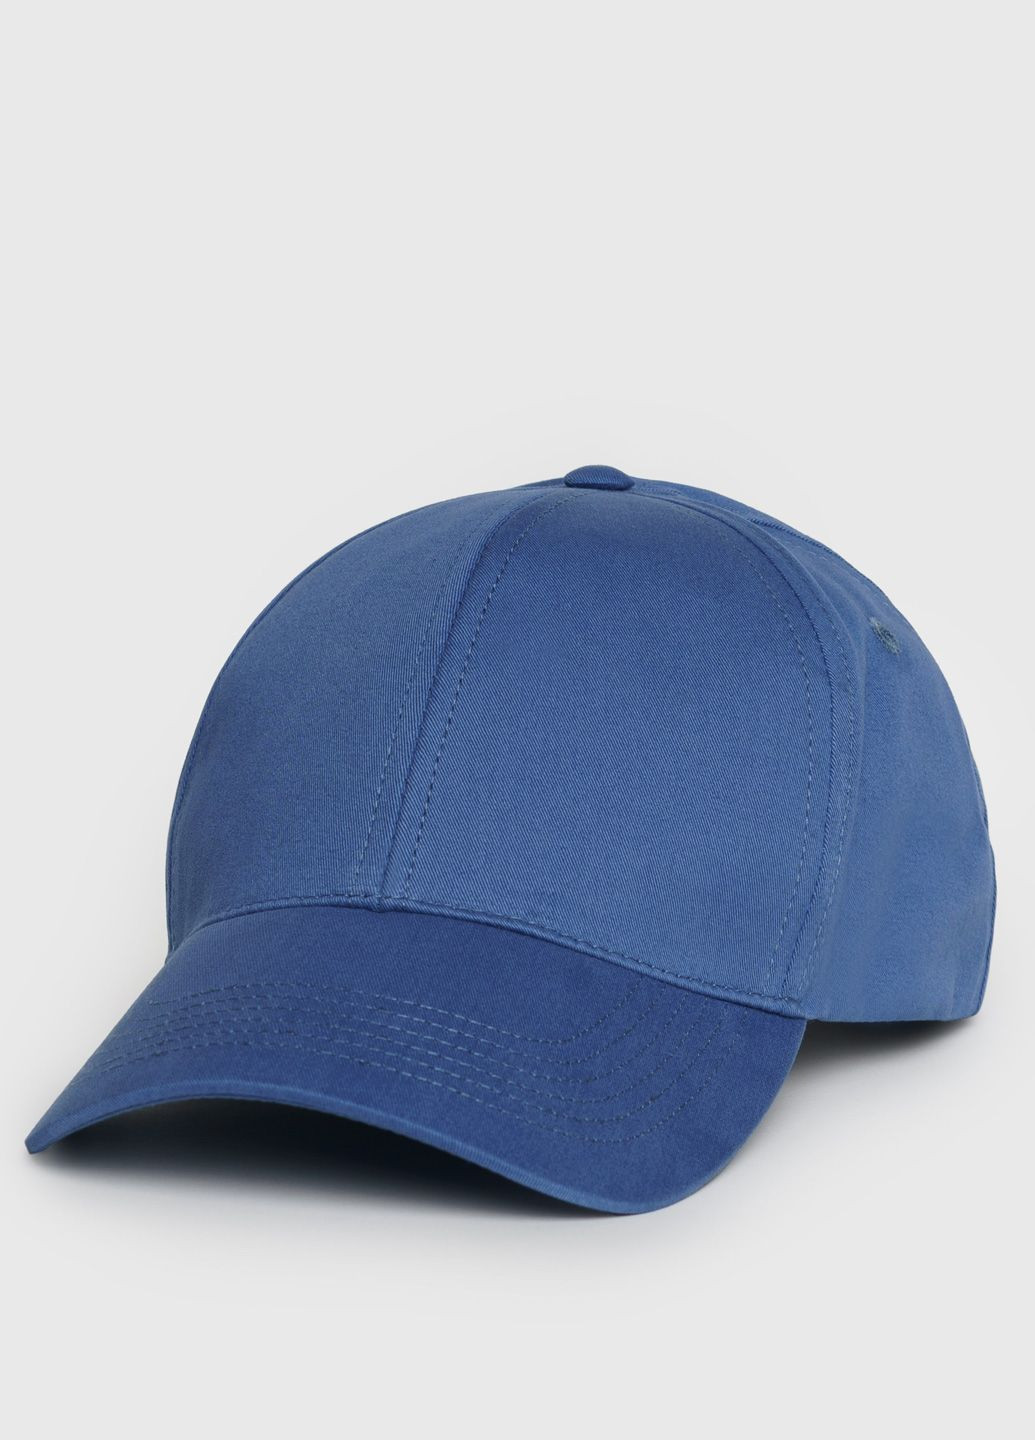 Кепка мужская синяя Arber кепка 2 (289870539)